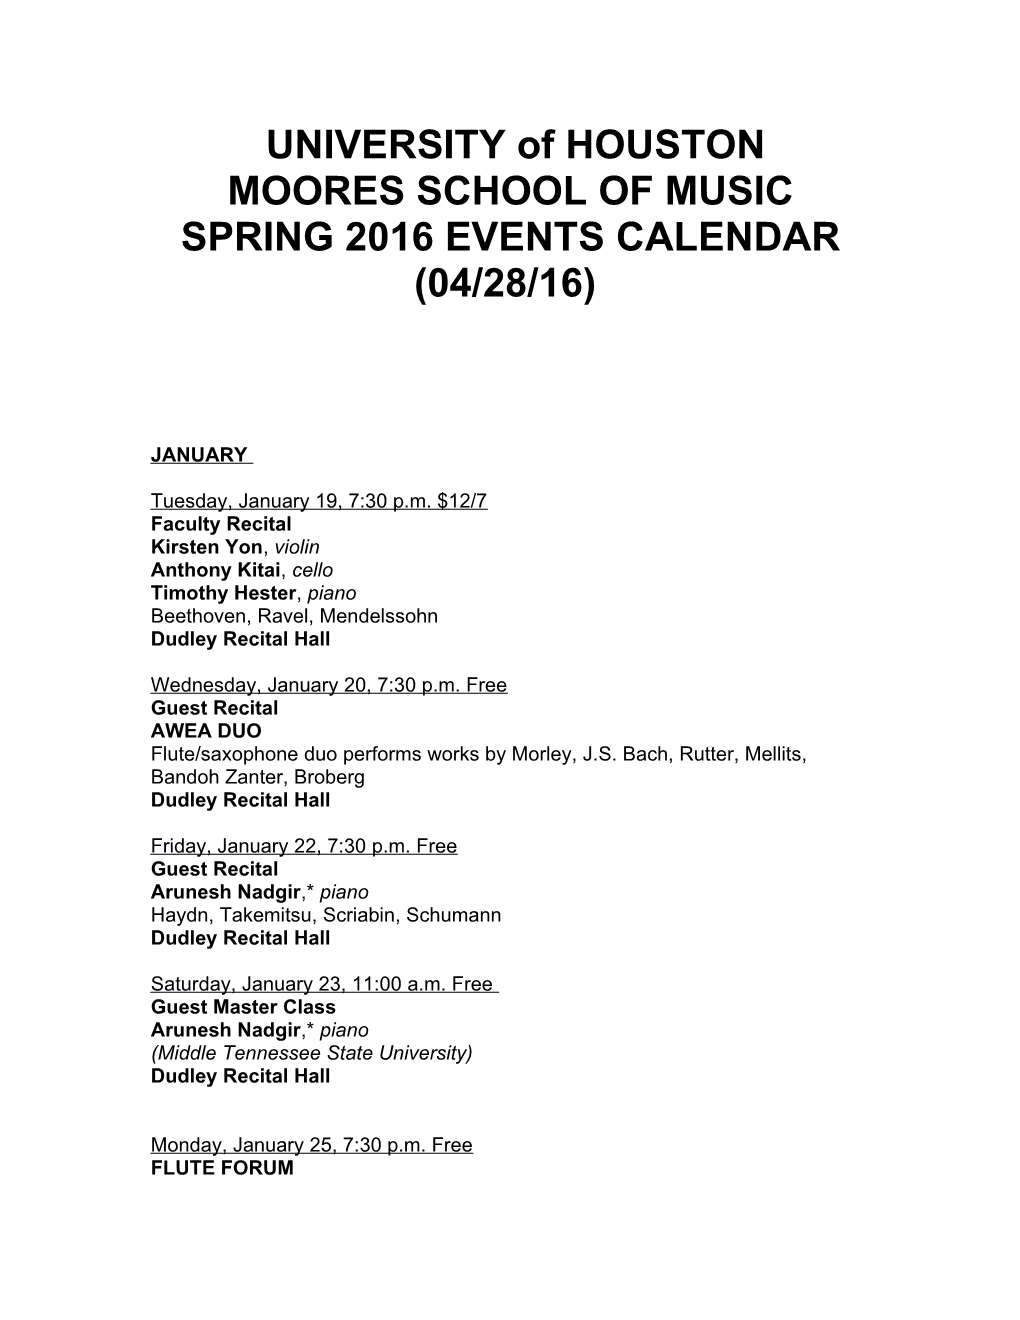 Moores School of Music